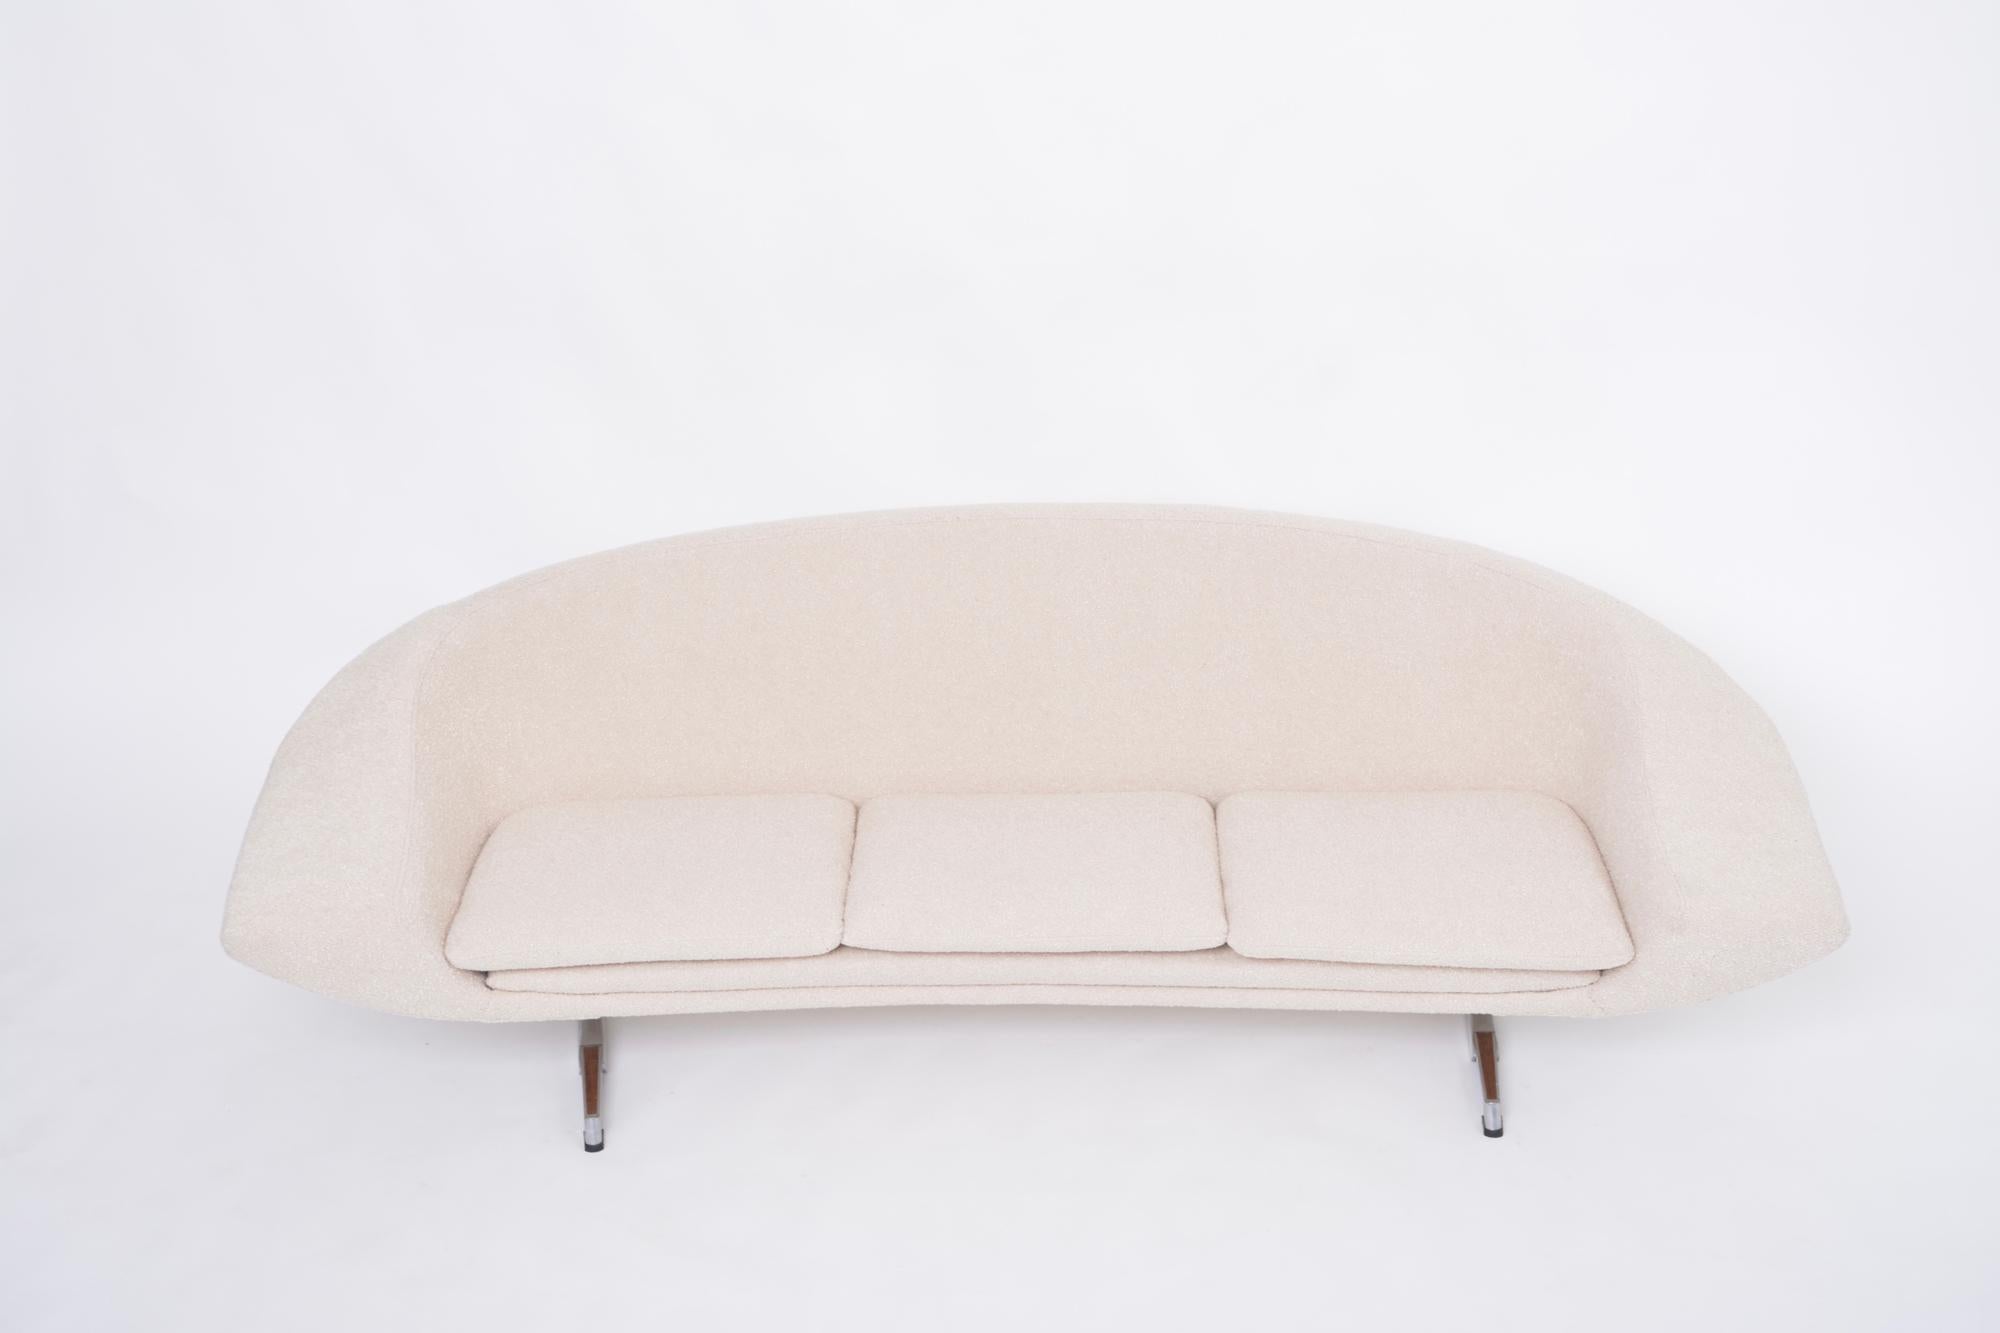 Swedish Beige reupholstered Mid-Century Modern Sofa model Saturn by Hans-Erik Johansson